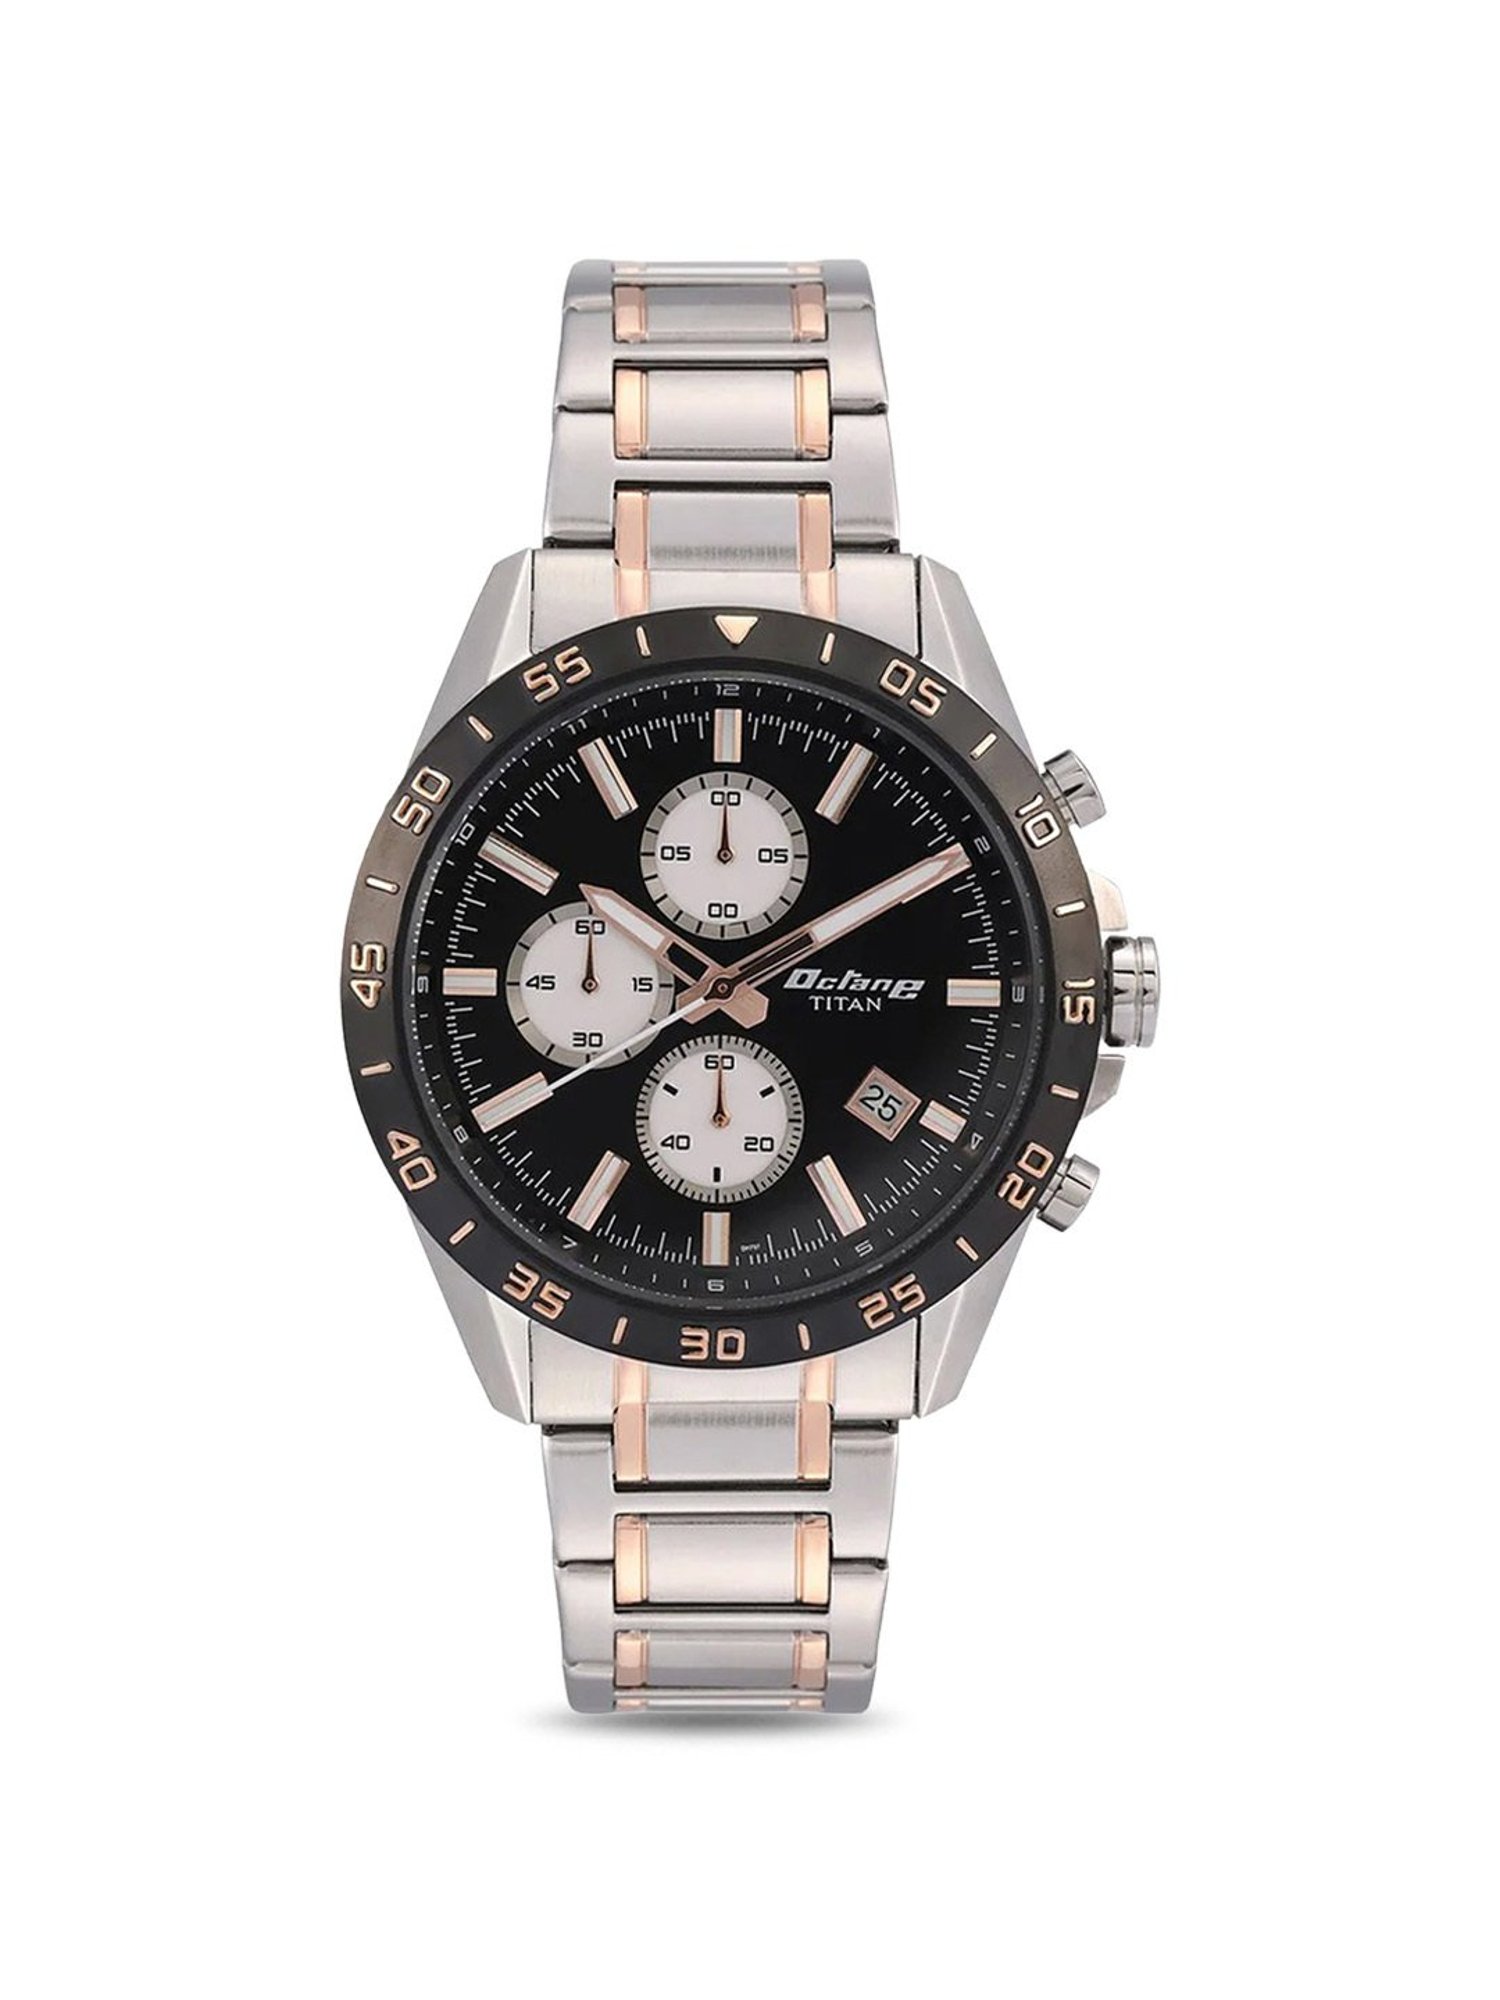 Titan Octane Analog Black Dial Men's Watch-NL90086KM03/NR90086KM03  Stainless Steel, Black Strap : Amazon.in: Watches